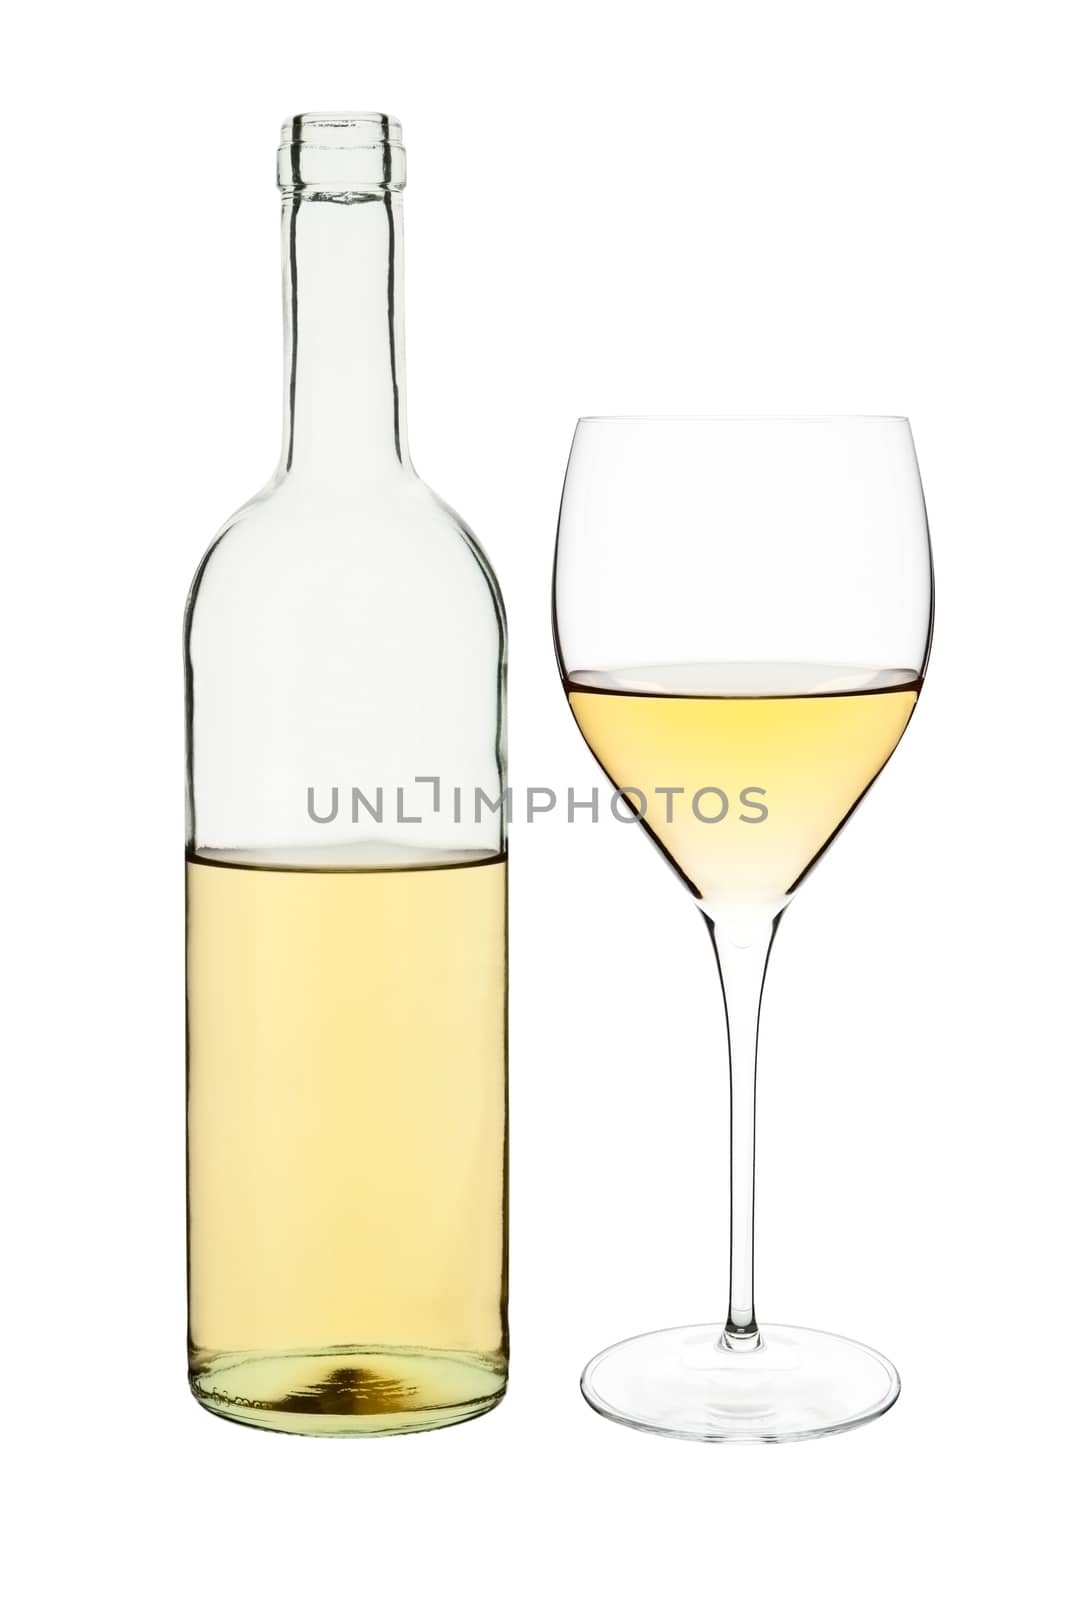 Elegant transparent white wine bottle and glass isolated on white background.